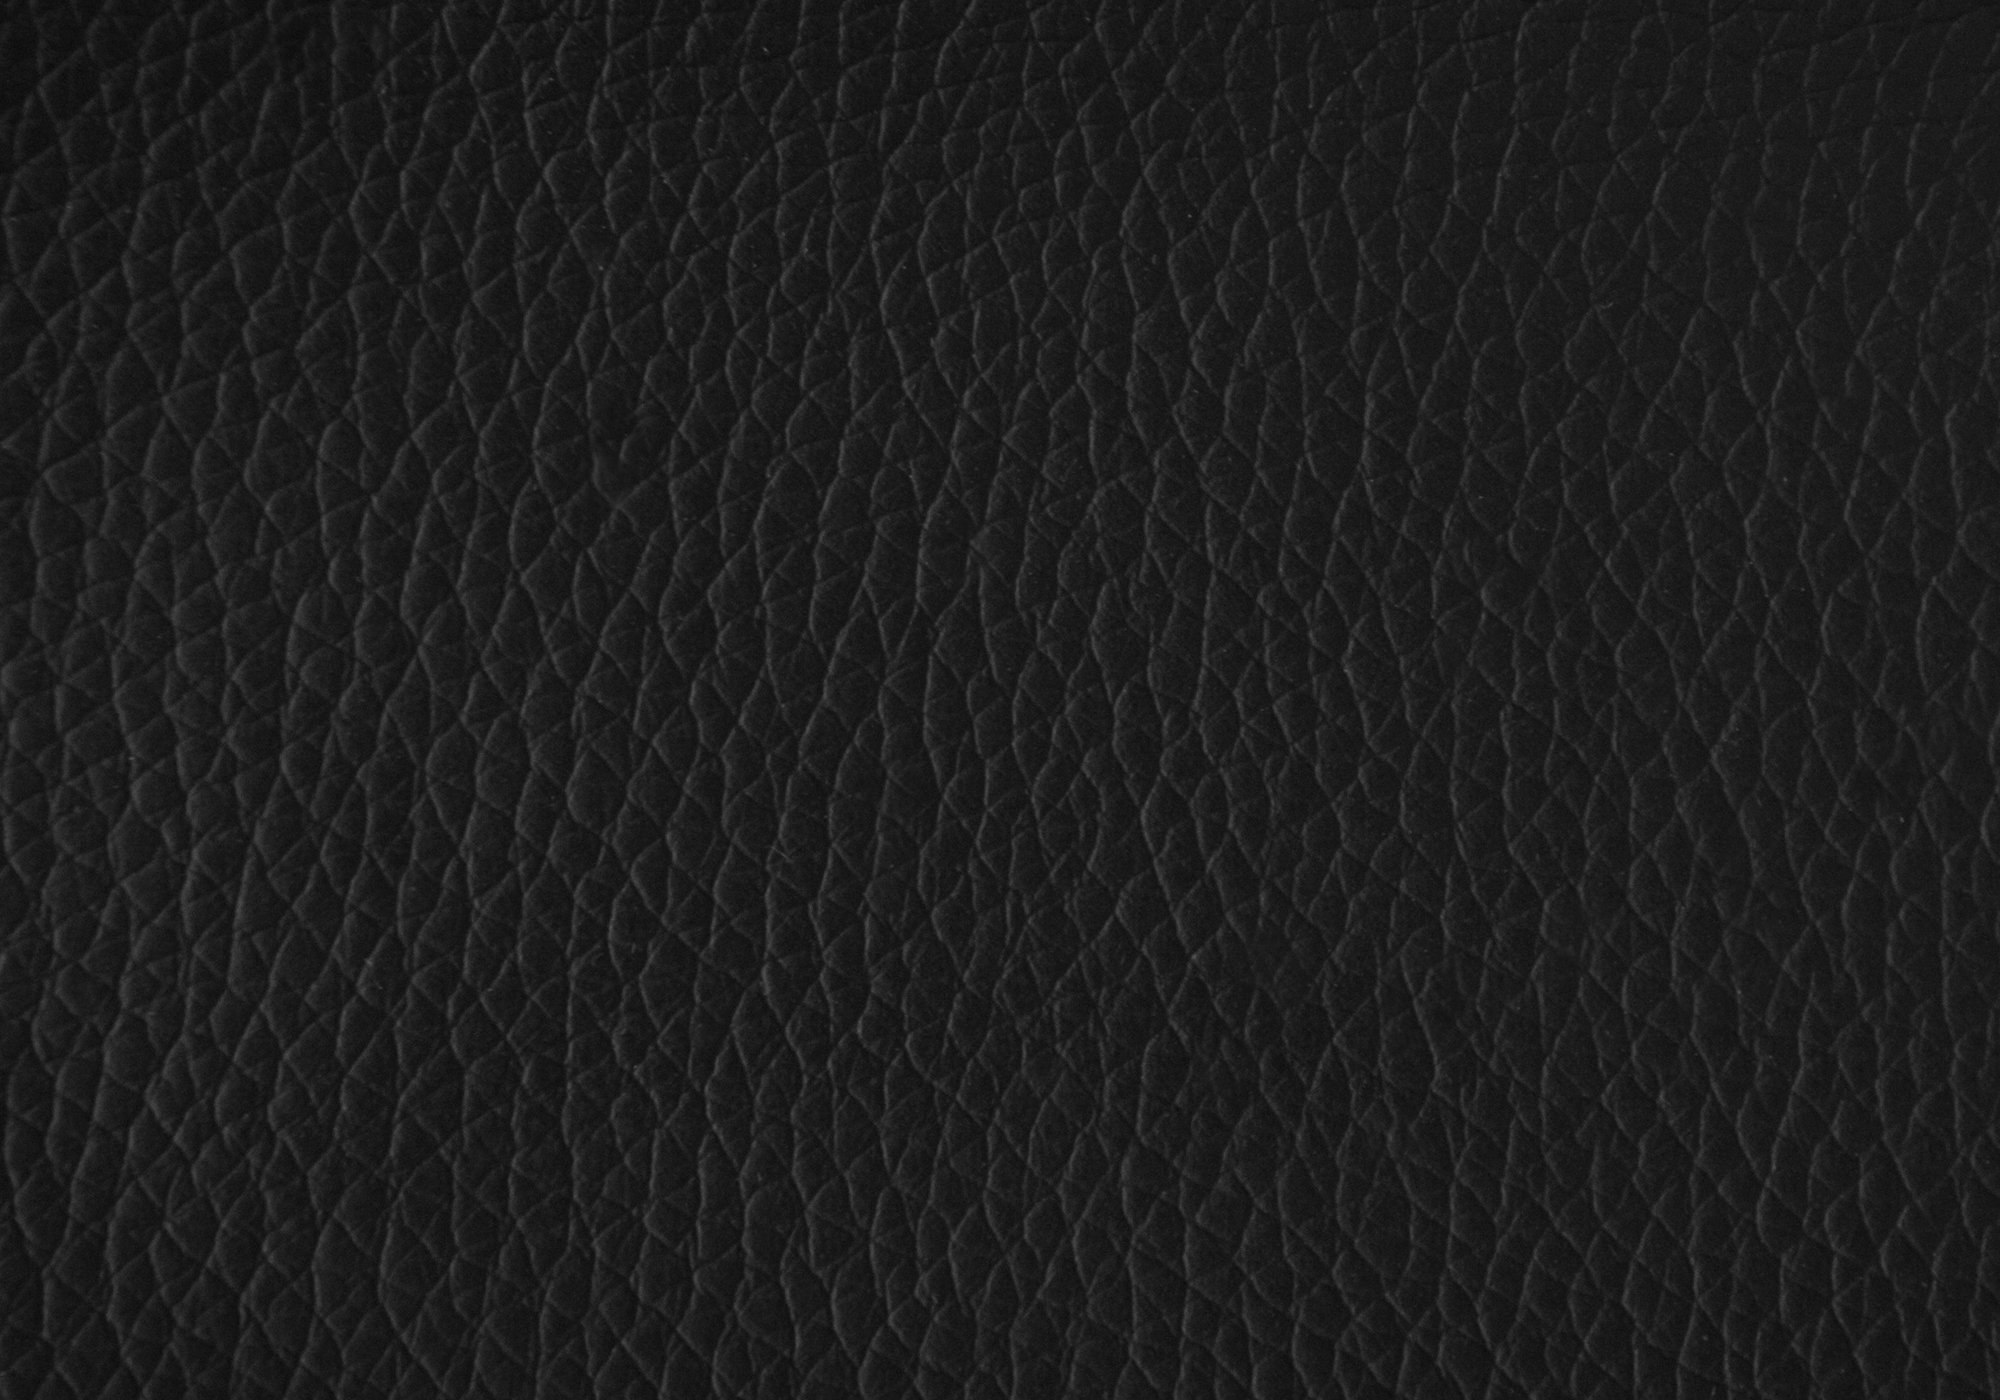 16.75" x 16.75" x 17" Black Leather Look Fabric Ottoman